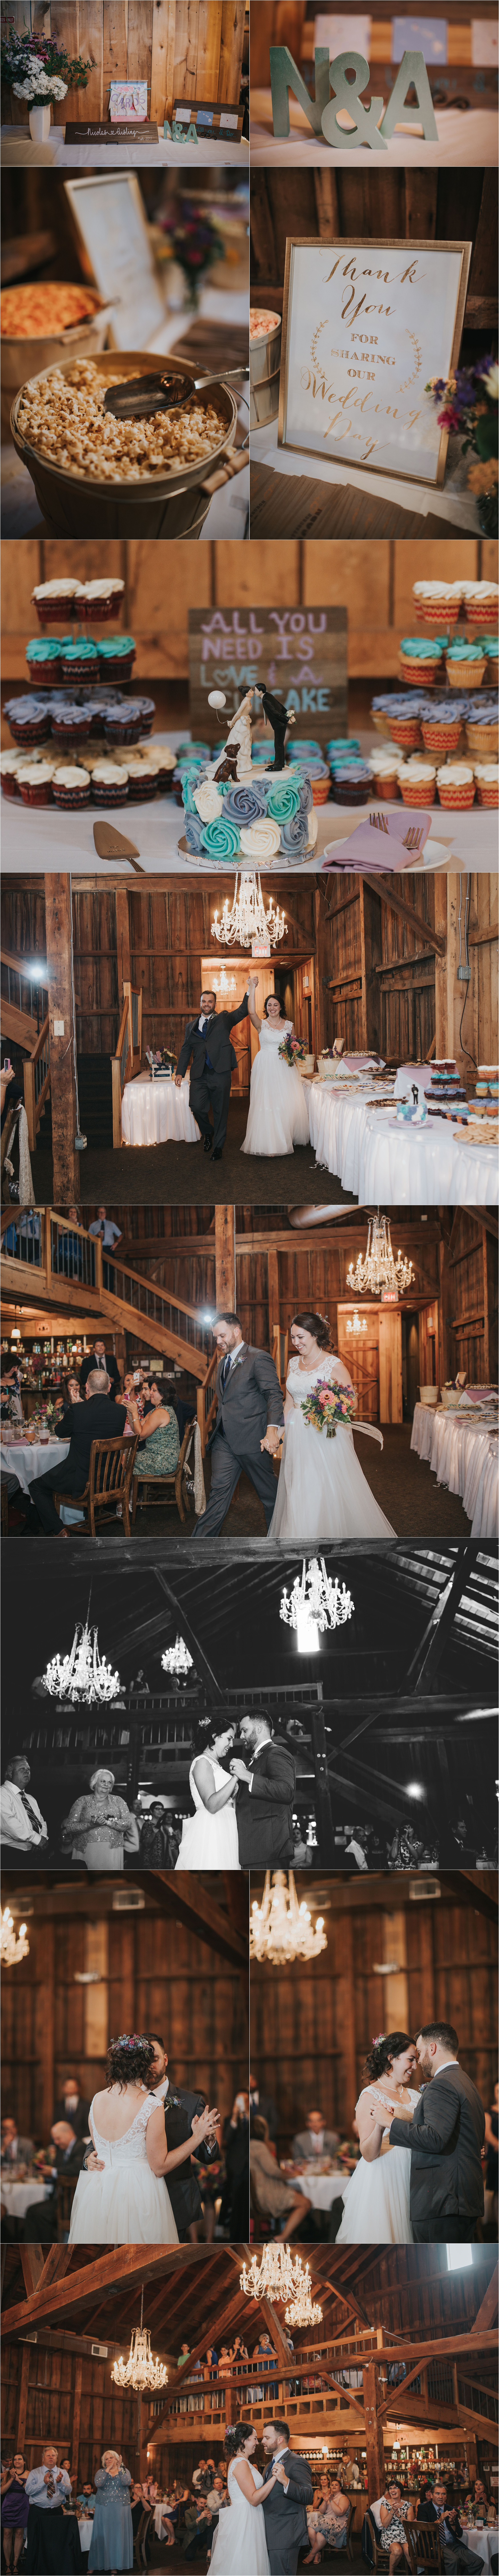 08-bells-banquets-wedding-photos.jpg